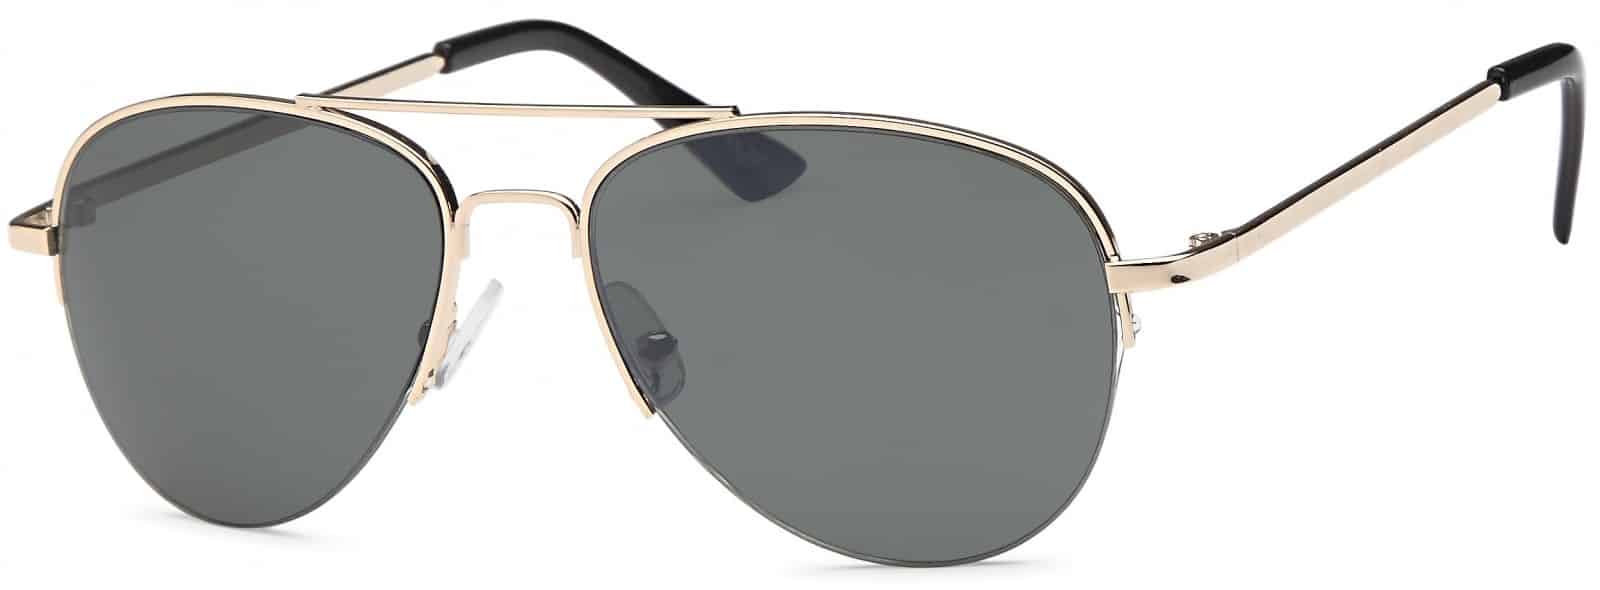 7835 Small Face Aviator - Beach Time Sunglasses Best Cheap Shades